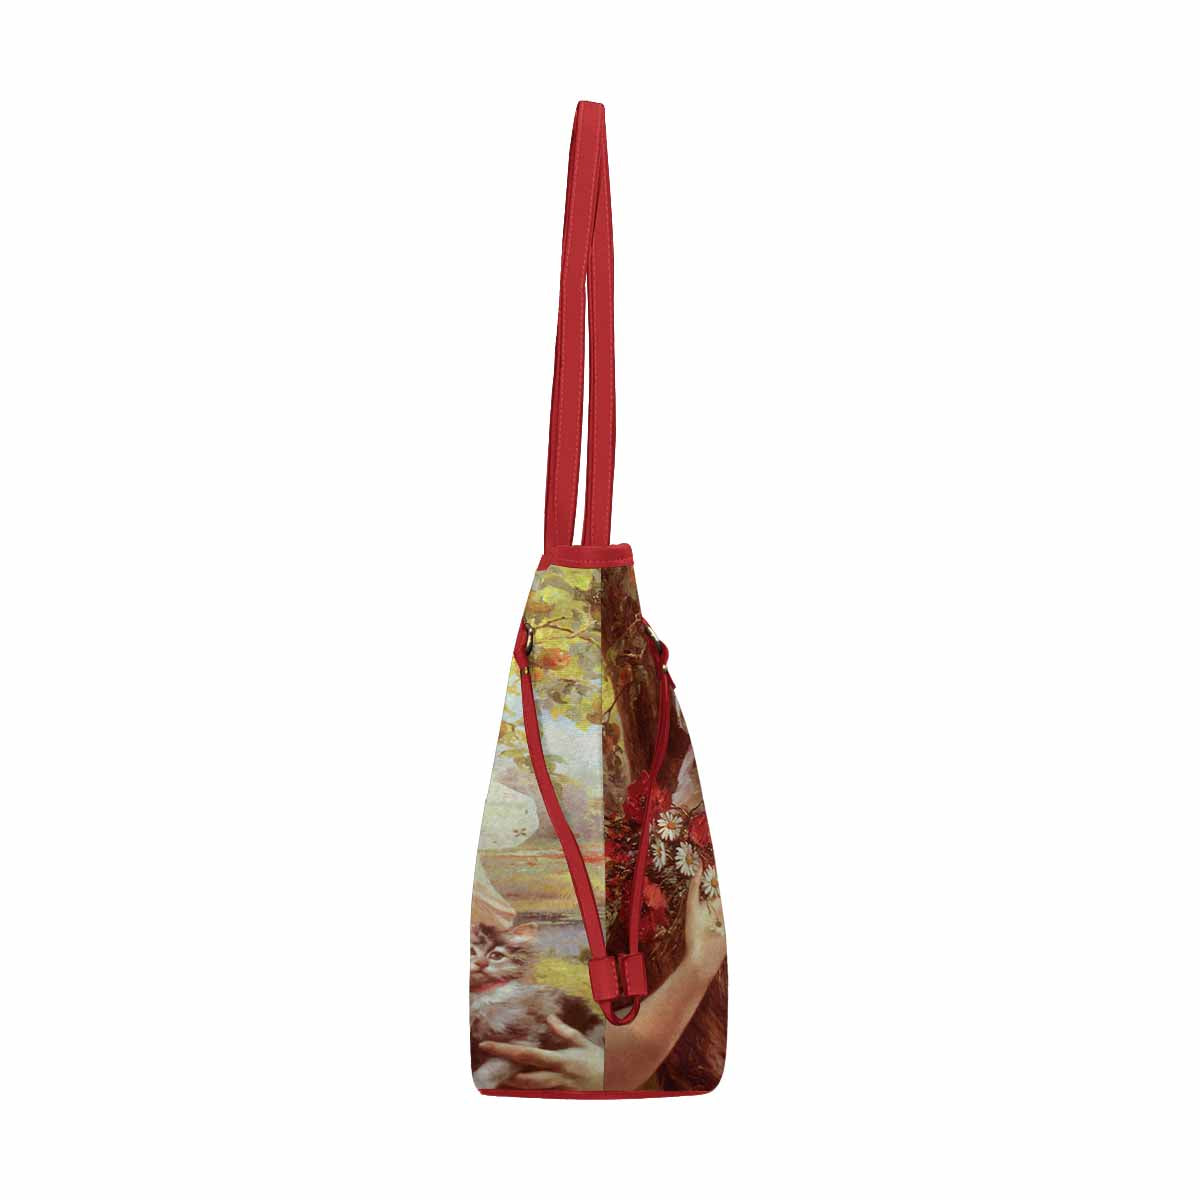 Victorian Lady Design Handbag, Model 1695361, Country Summer, RED TRIM